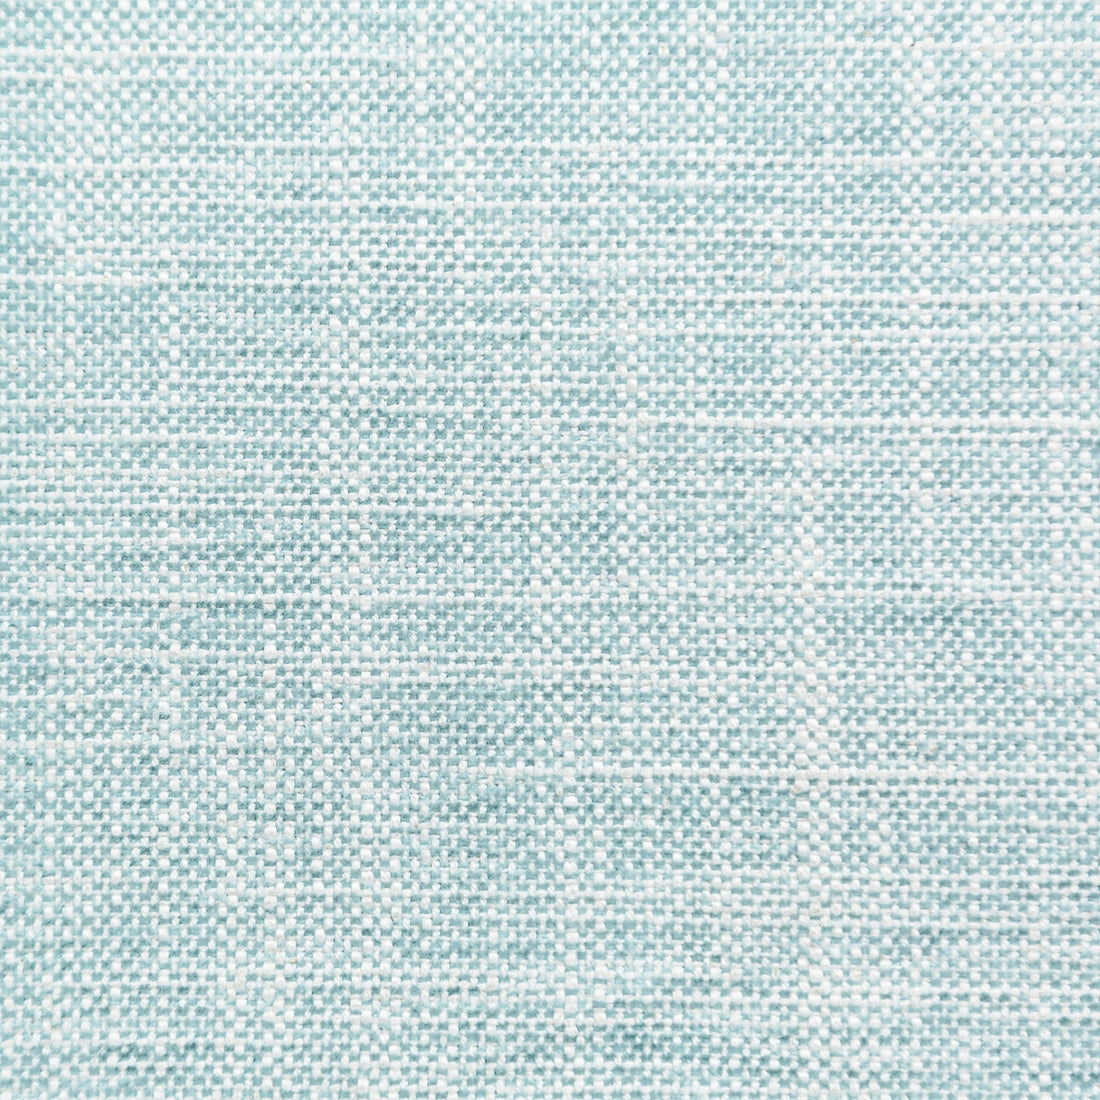 Okanda fabric in aqua color - pattern 35768.15.0 - by Kravet Smart in the Performance Kravetarmor collection